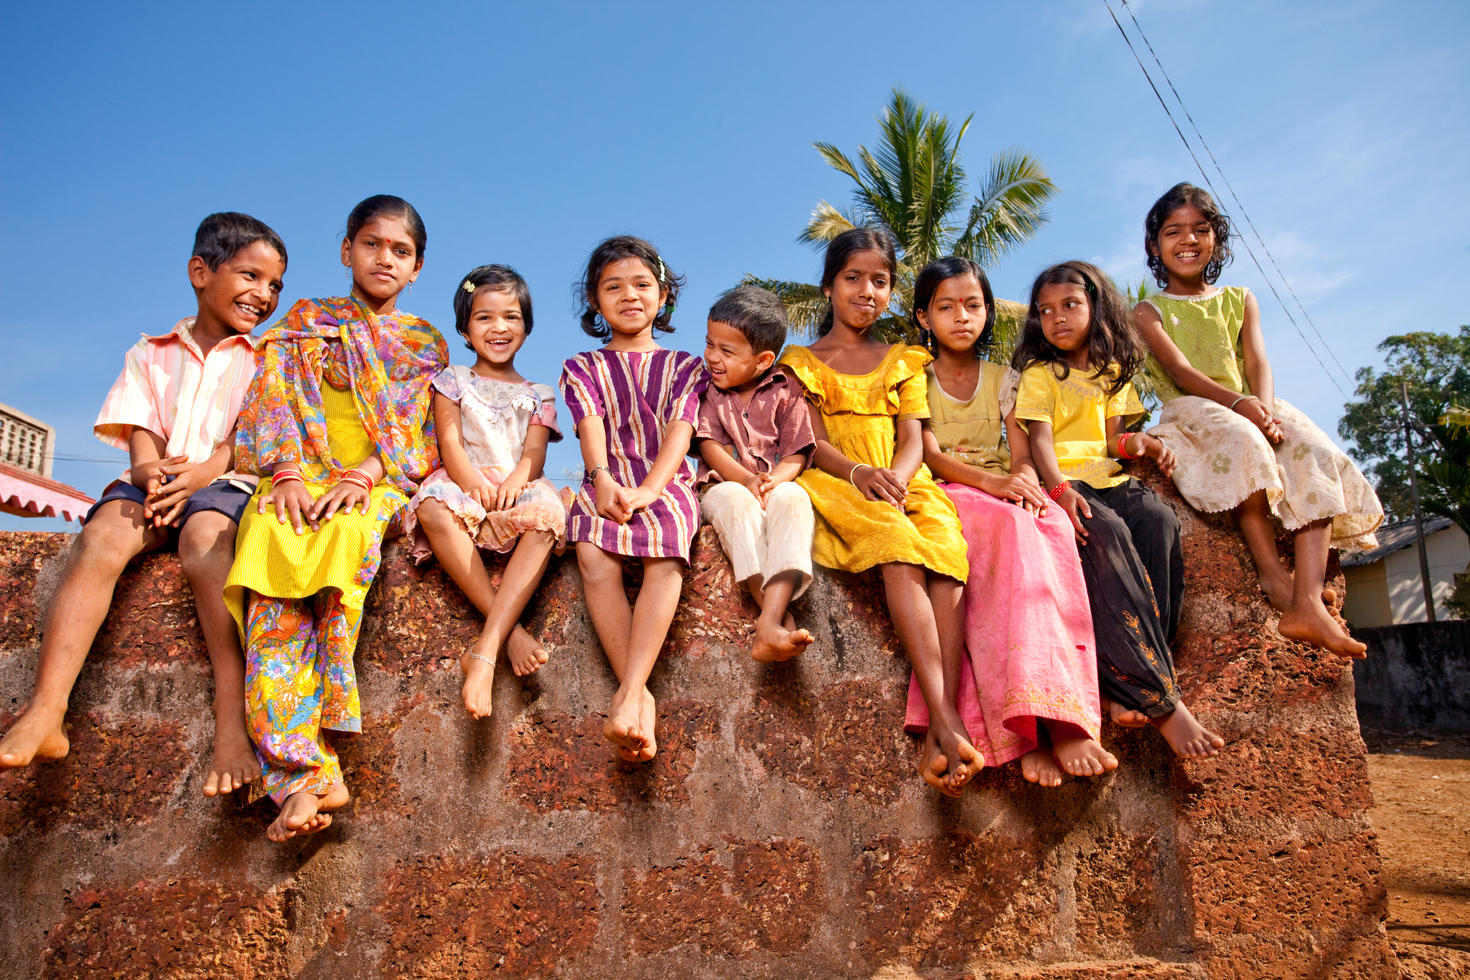 Indian children sitting on rock smiling.